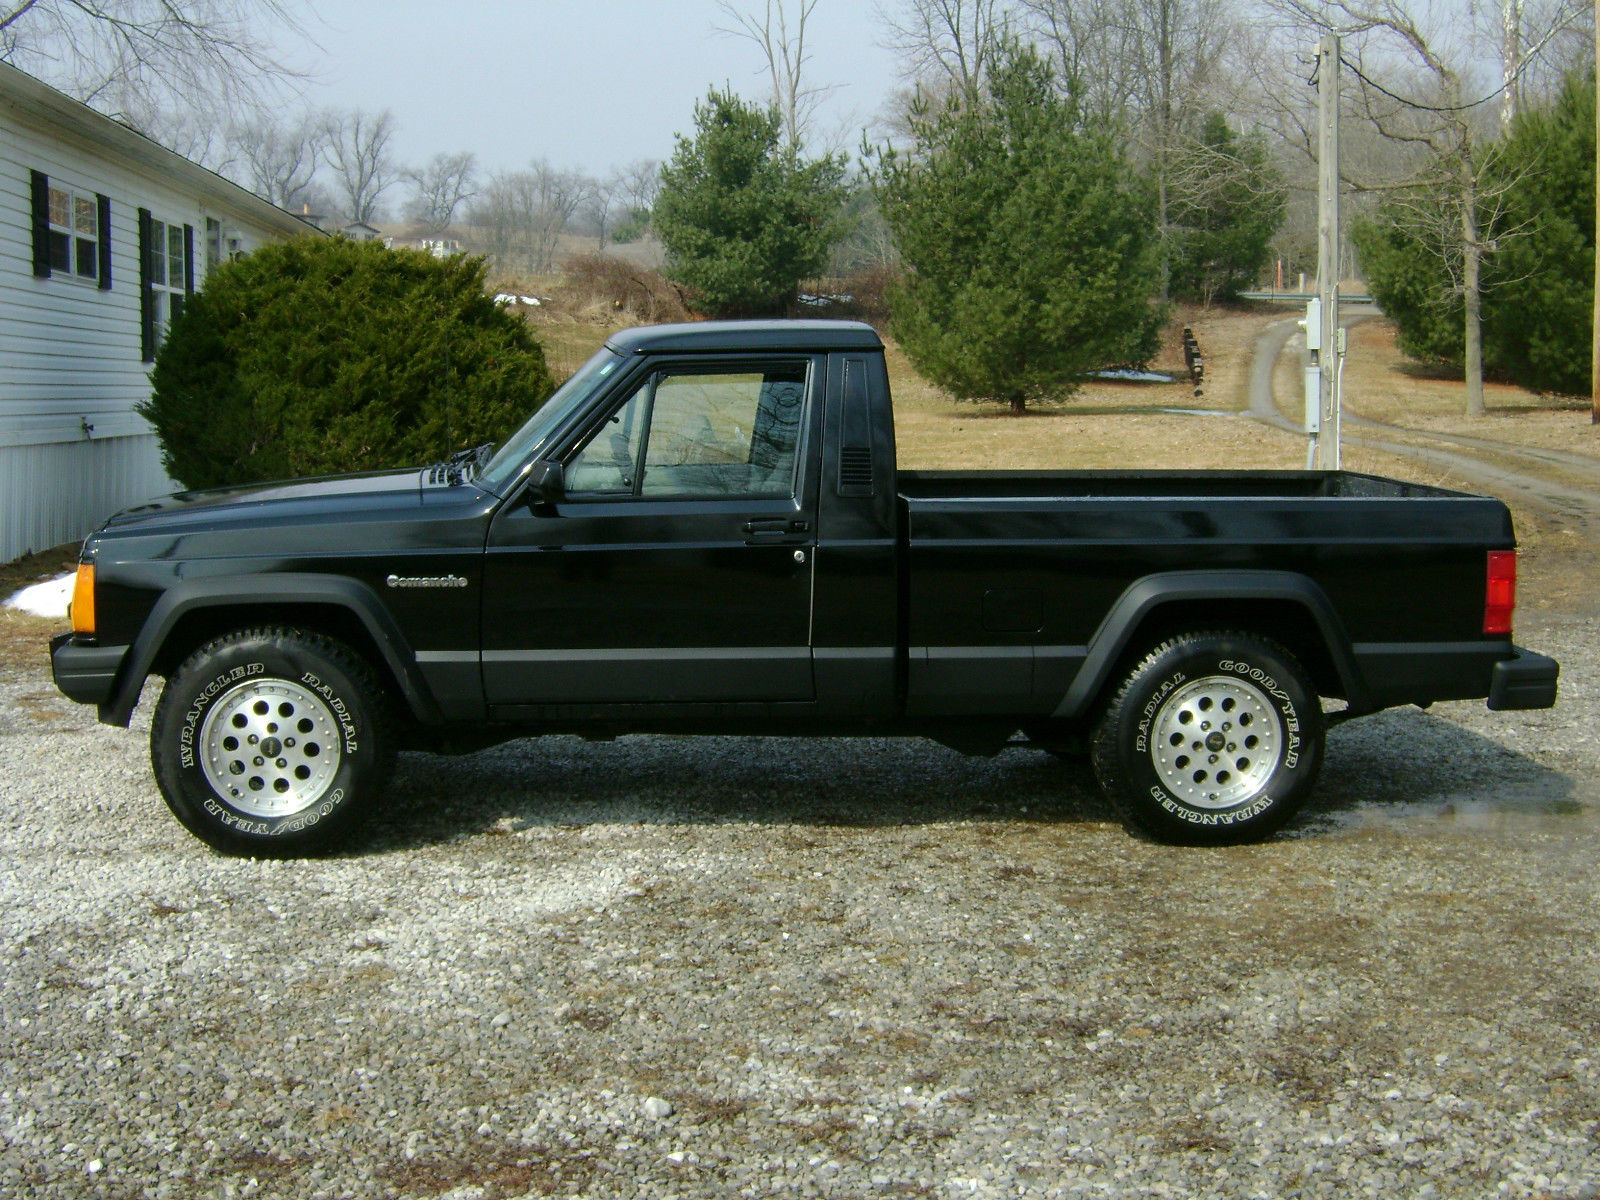 1989 Jeep Comanche for sale in Millersburg, Ohio, United States.